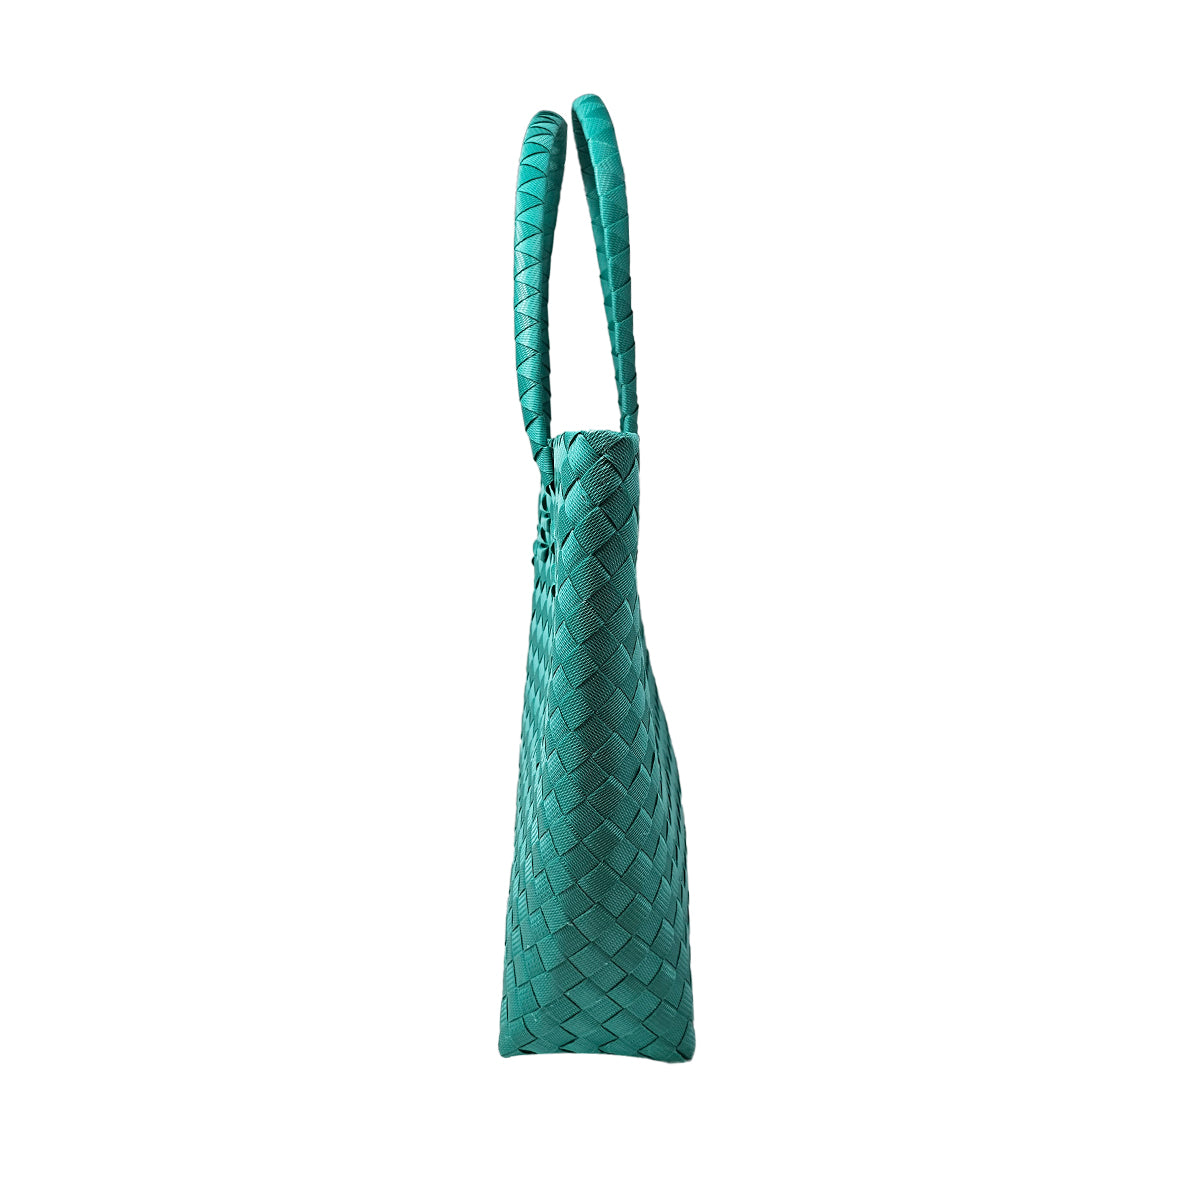 Misenka Handicrafts Philippine Bayong Mint Green Go with Zipper Bag - SALE 50% OFF